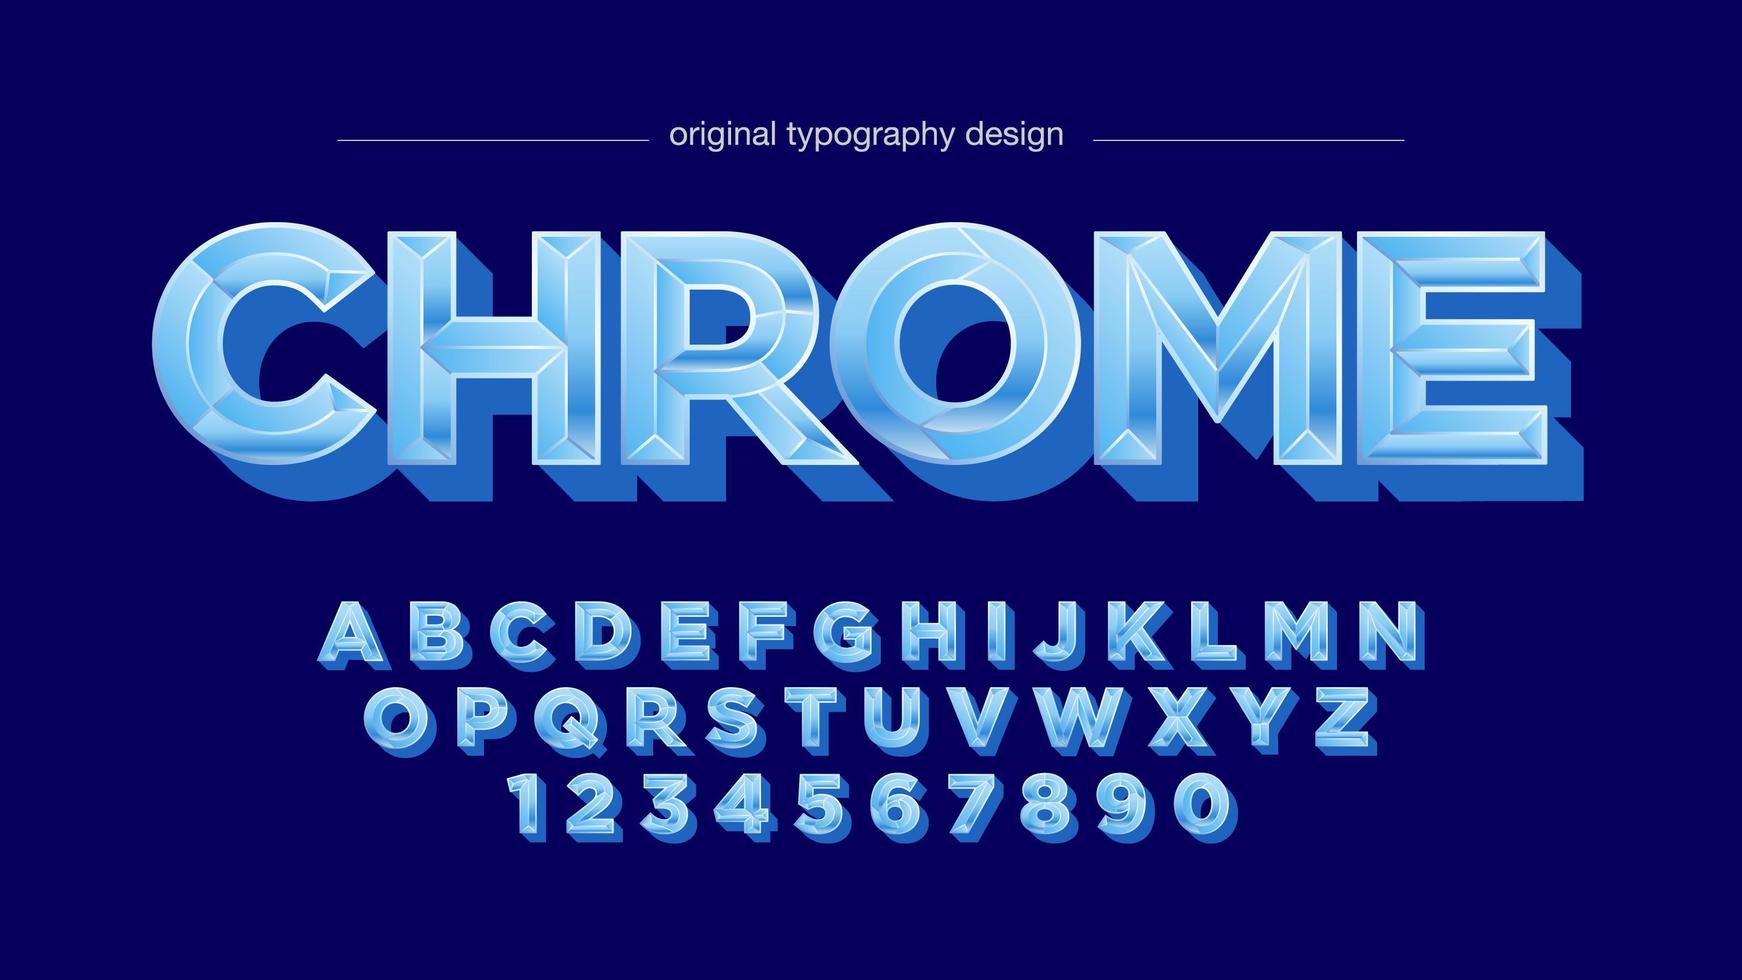 Blue Chrome Metallic Bold Uppercase Font vector